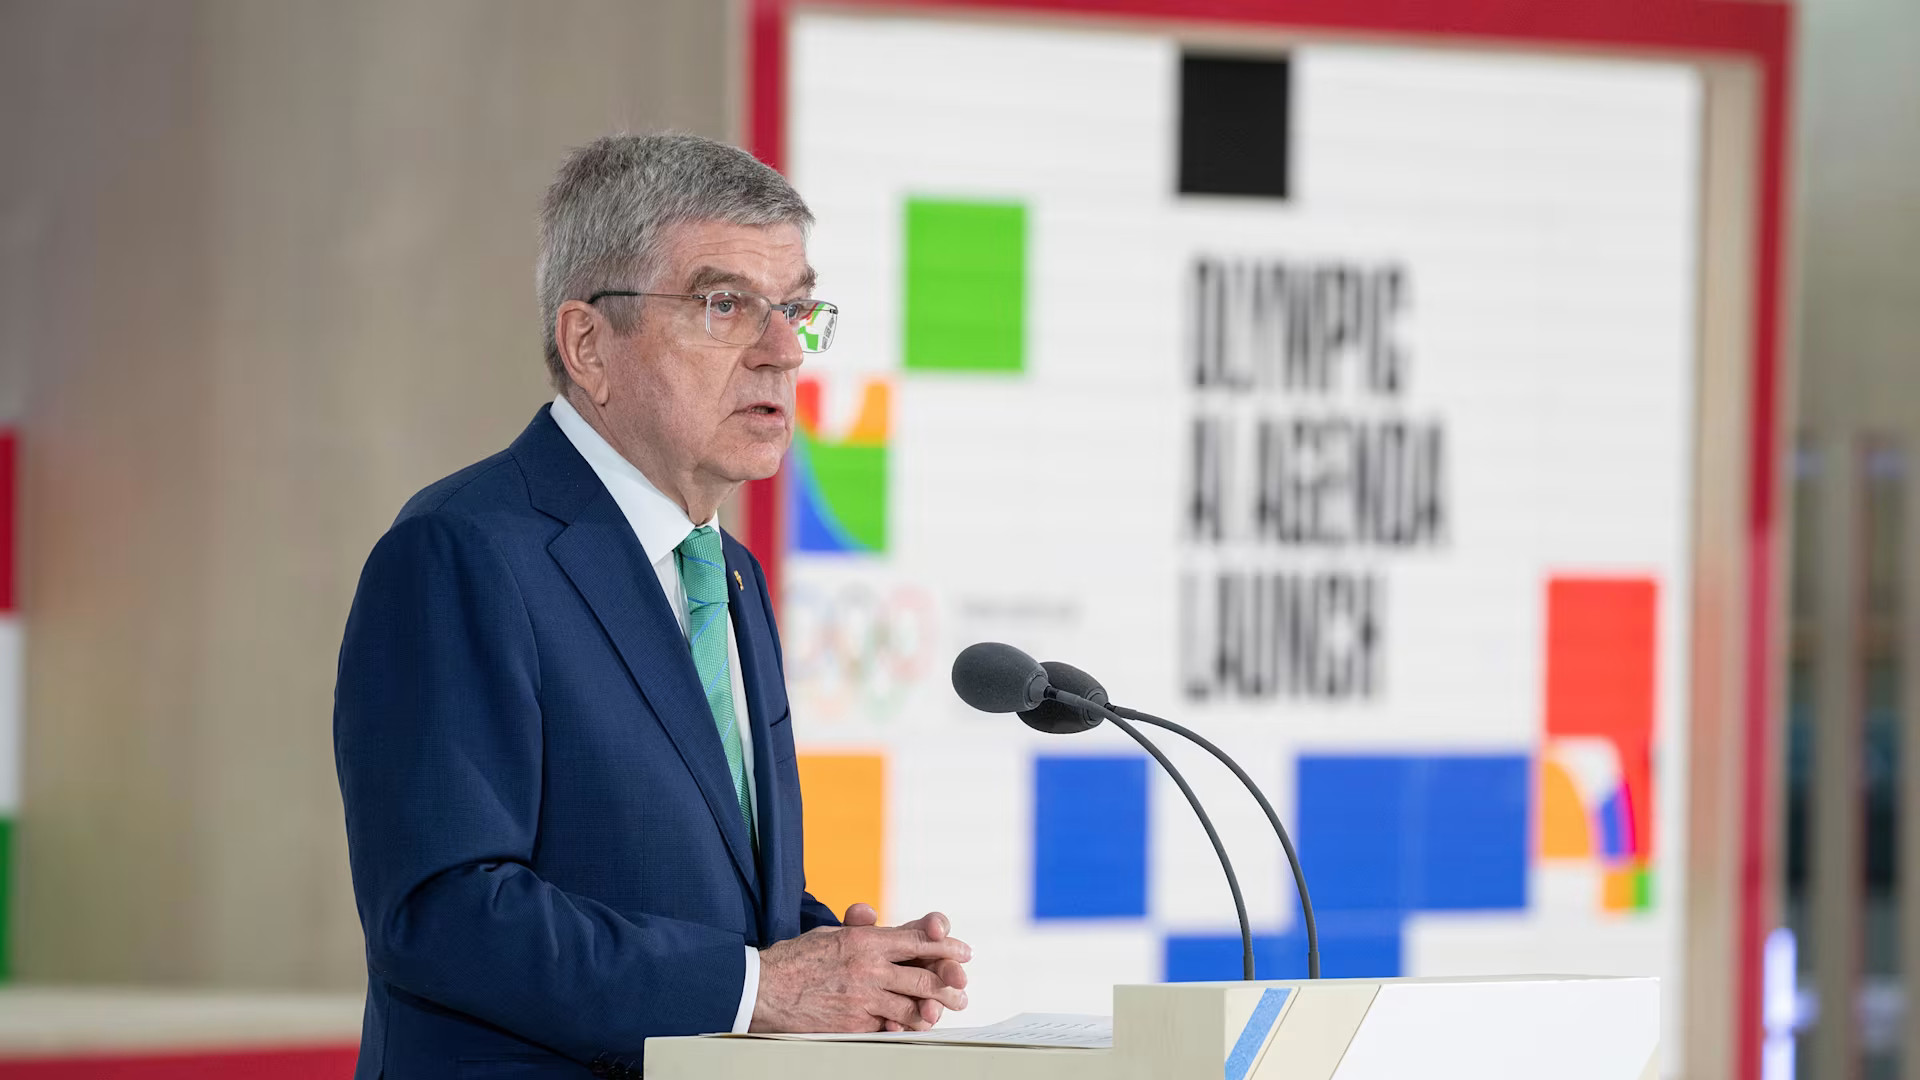 IOC President Thomas Bach unveiling the AI agenda